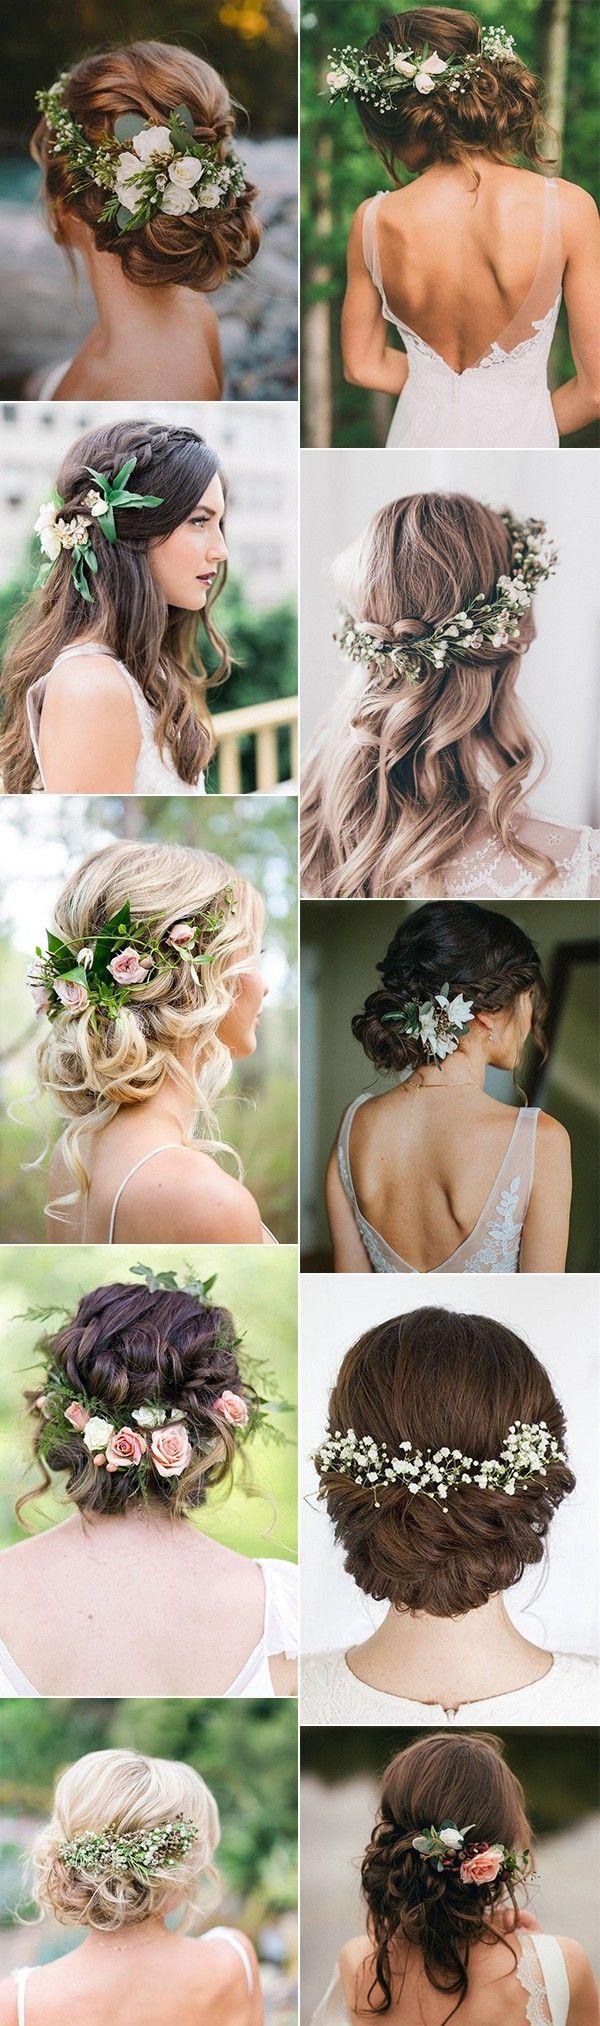 زفاف - 18 Trending Wedding Hairstyles With Flowers - Page 3 Of 3